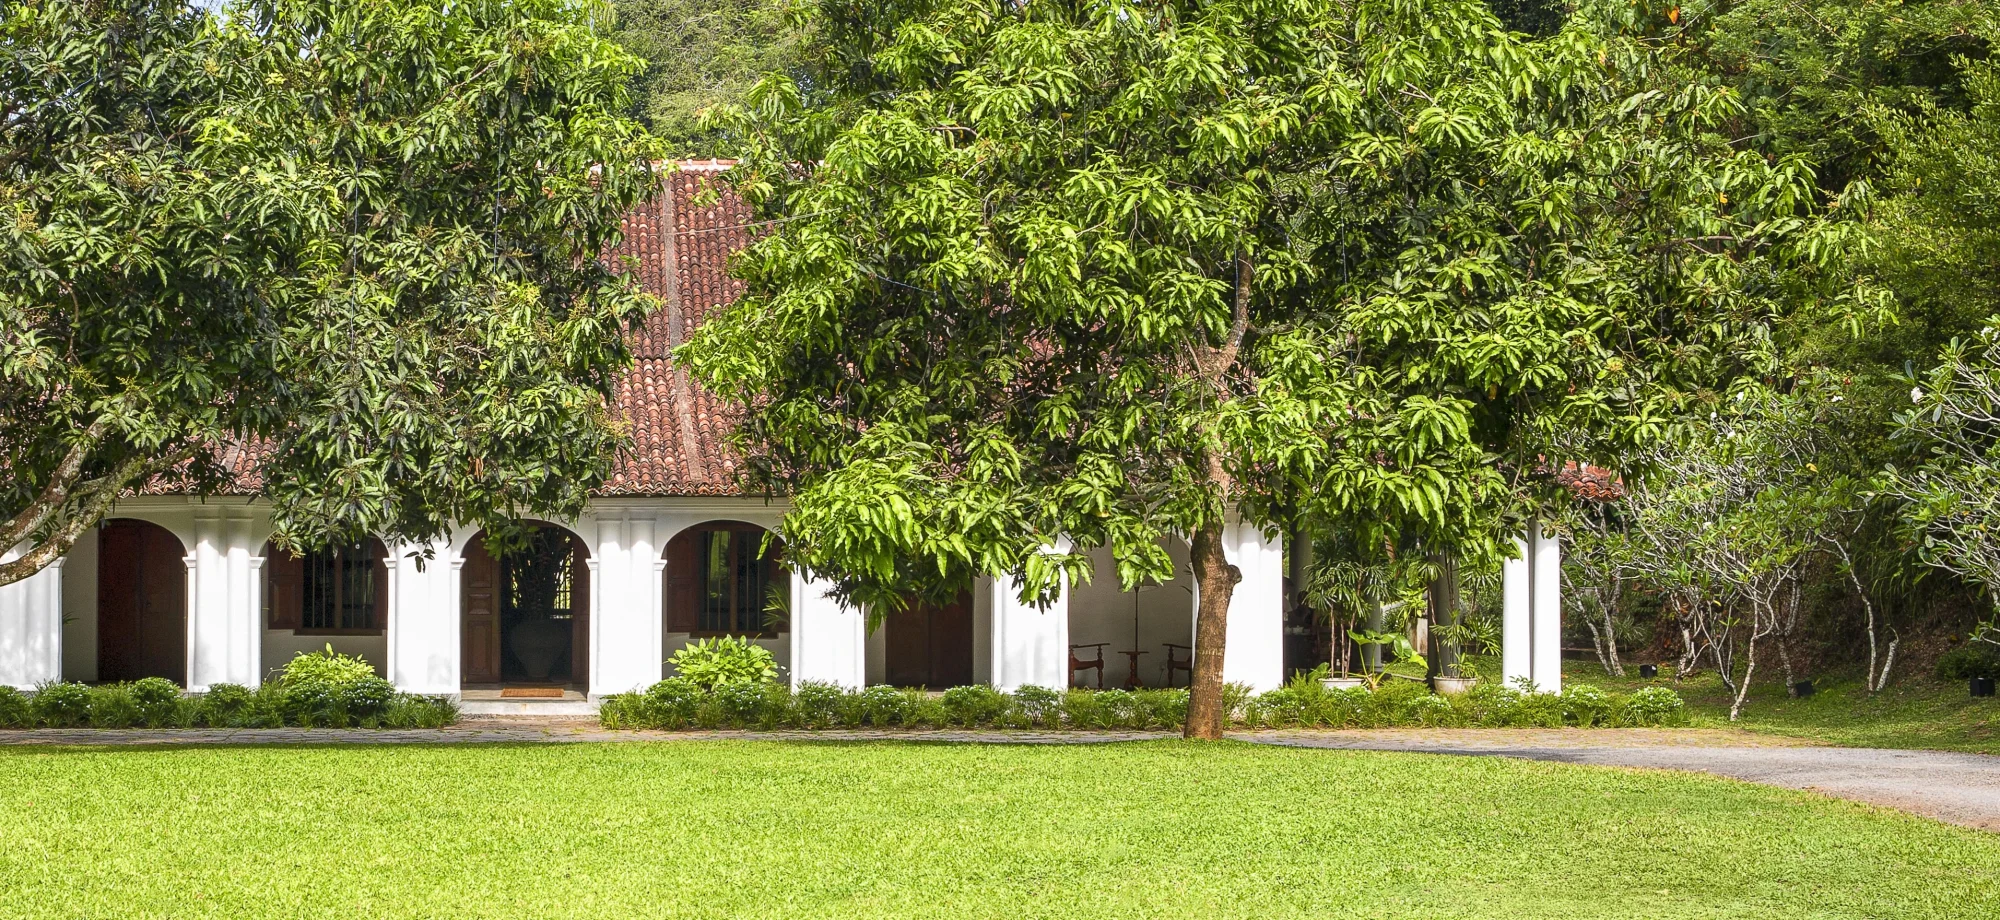 The Kandy House in Sri Lanka. 